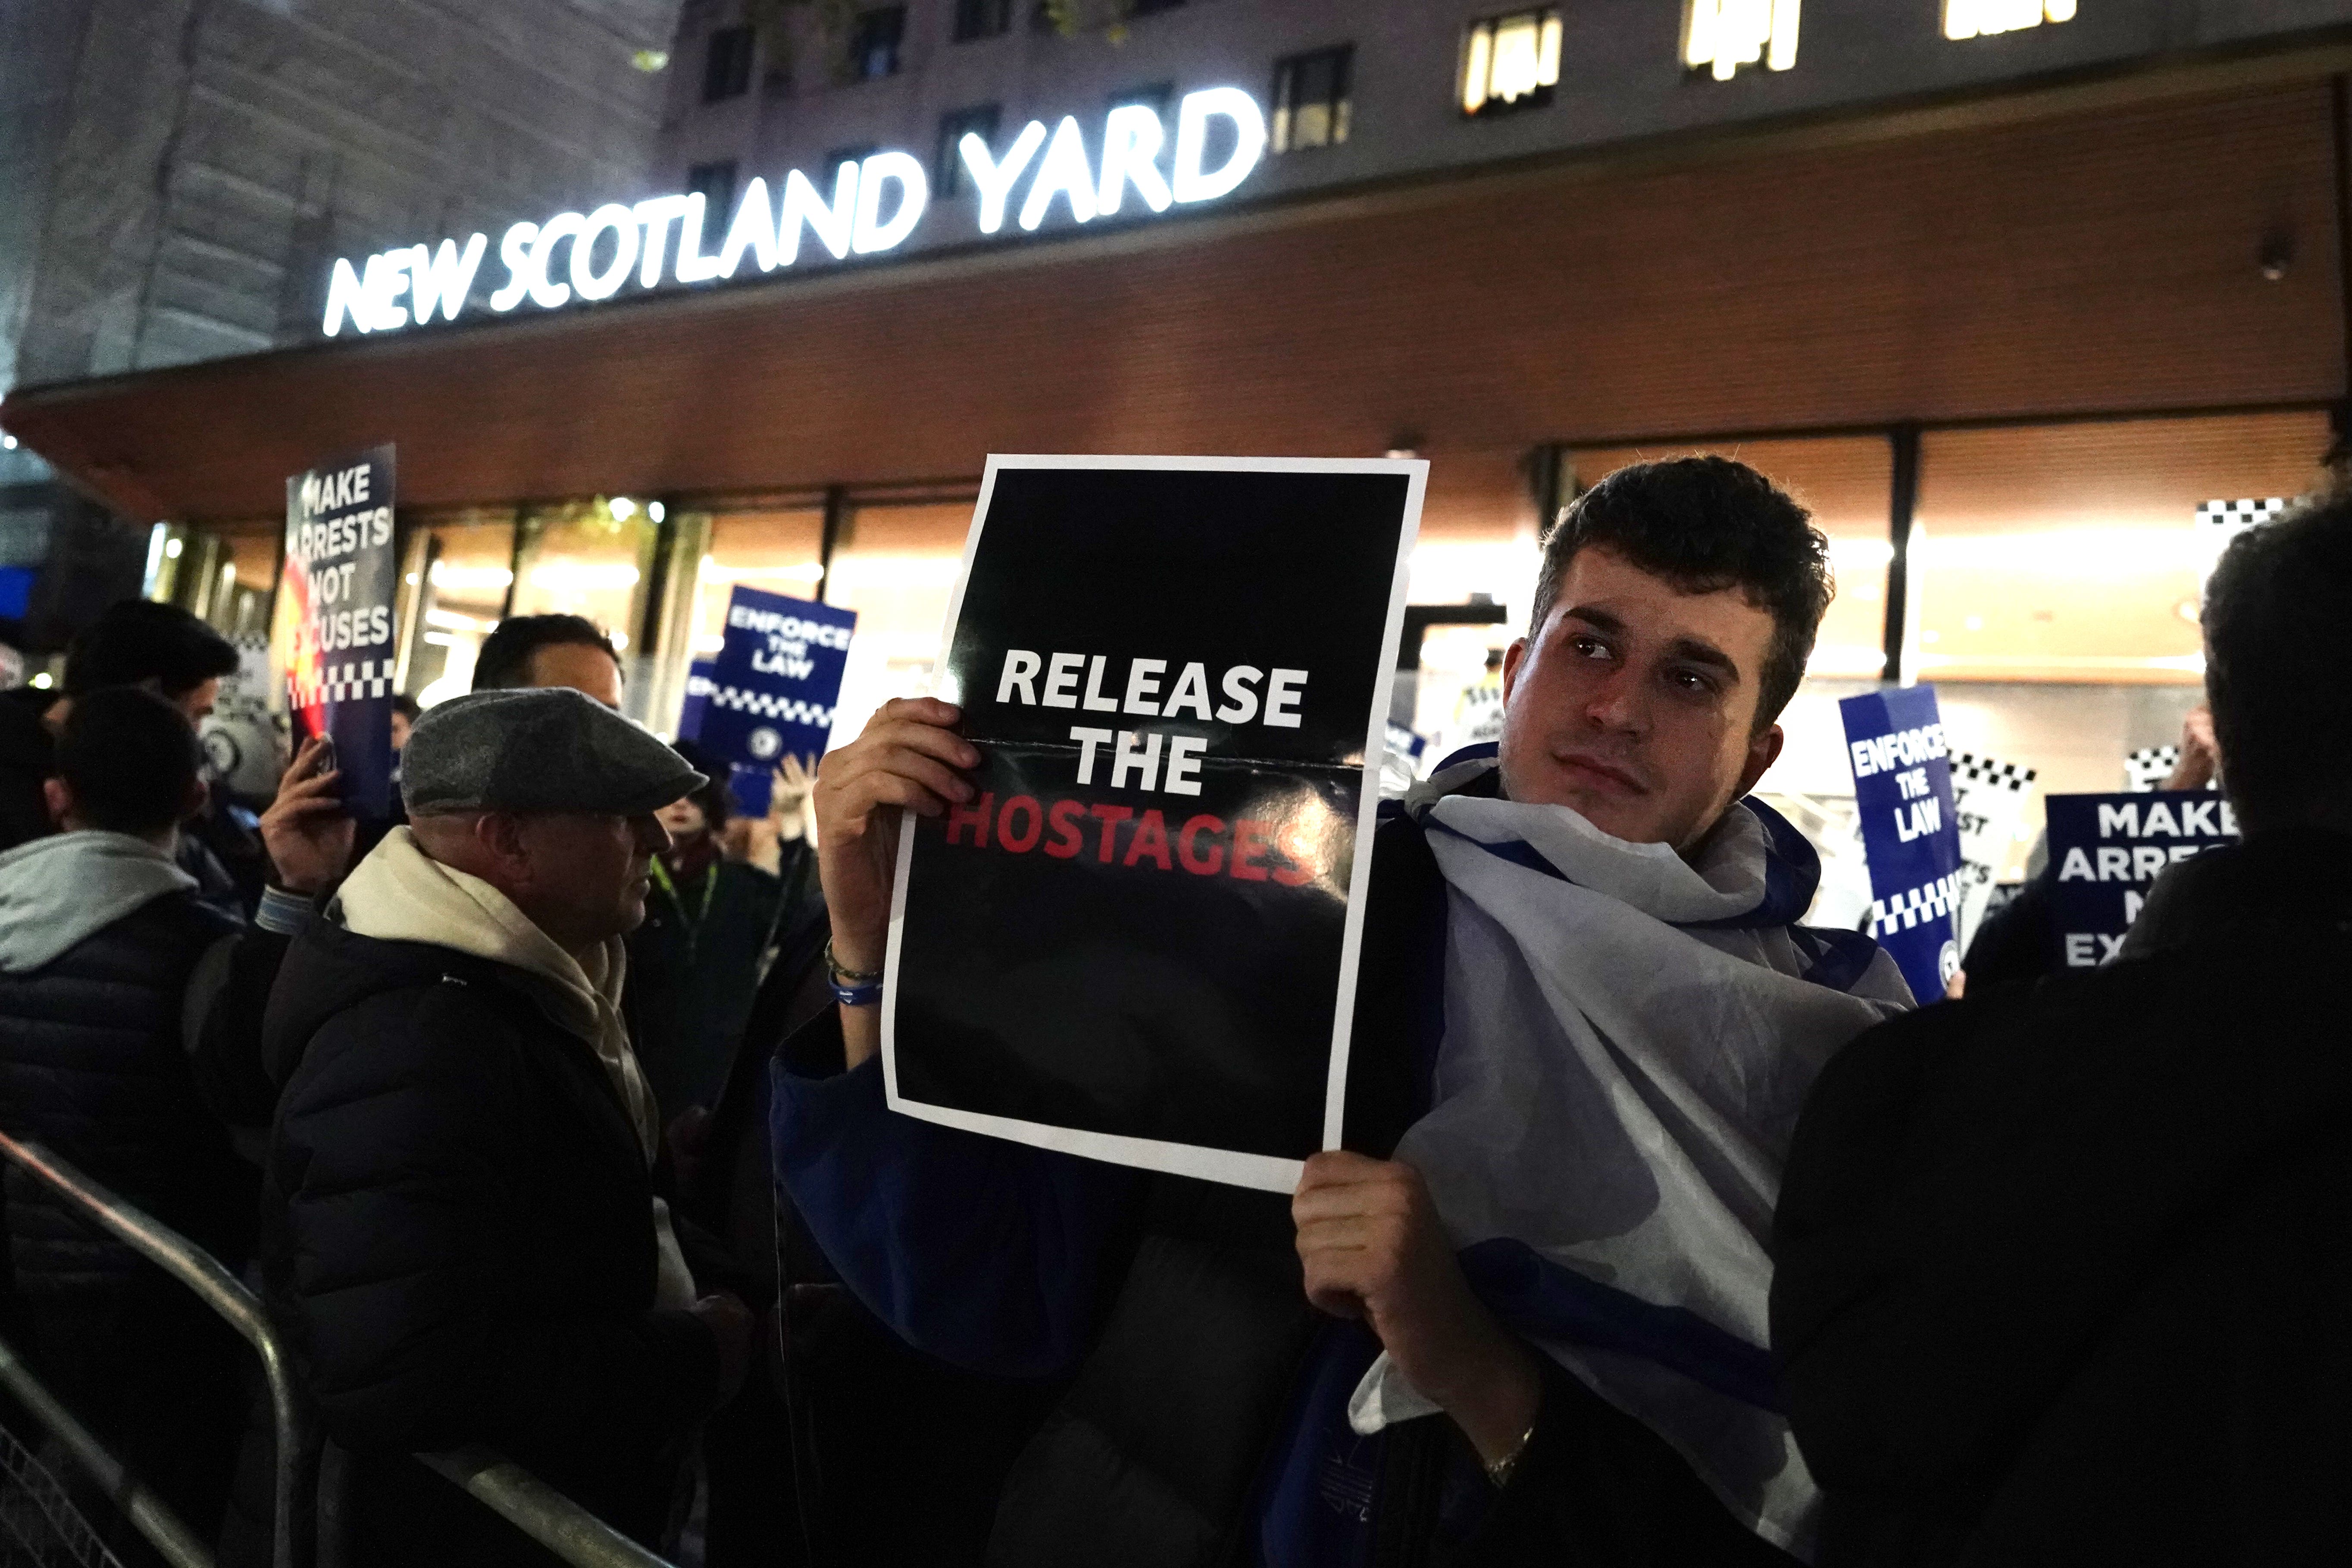 Protesters outside New Scotland Yard (Jordan Pettitt/PA)